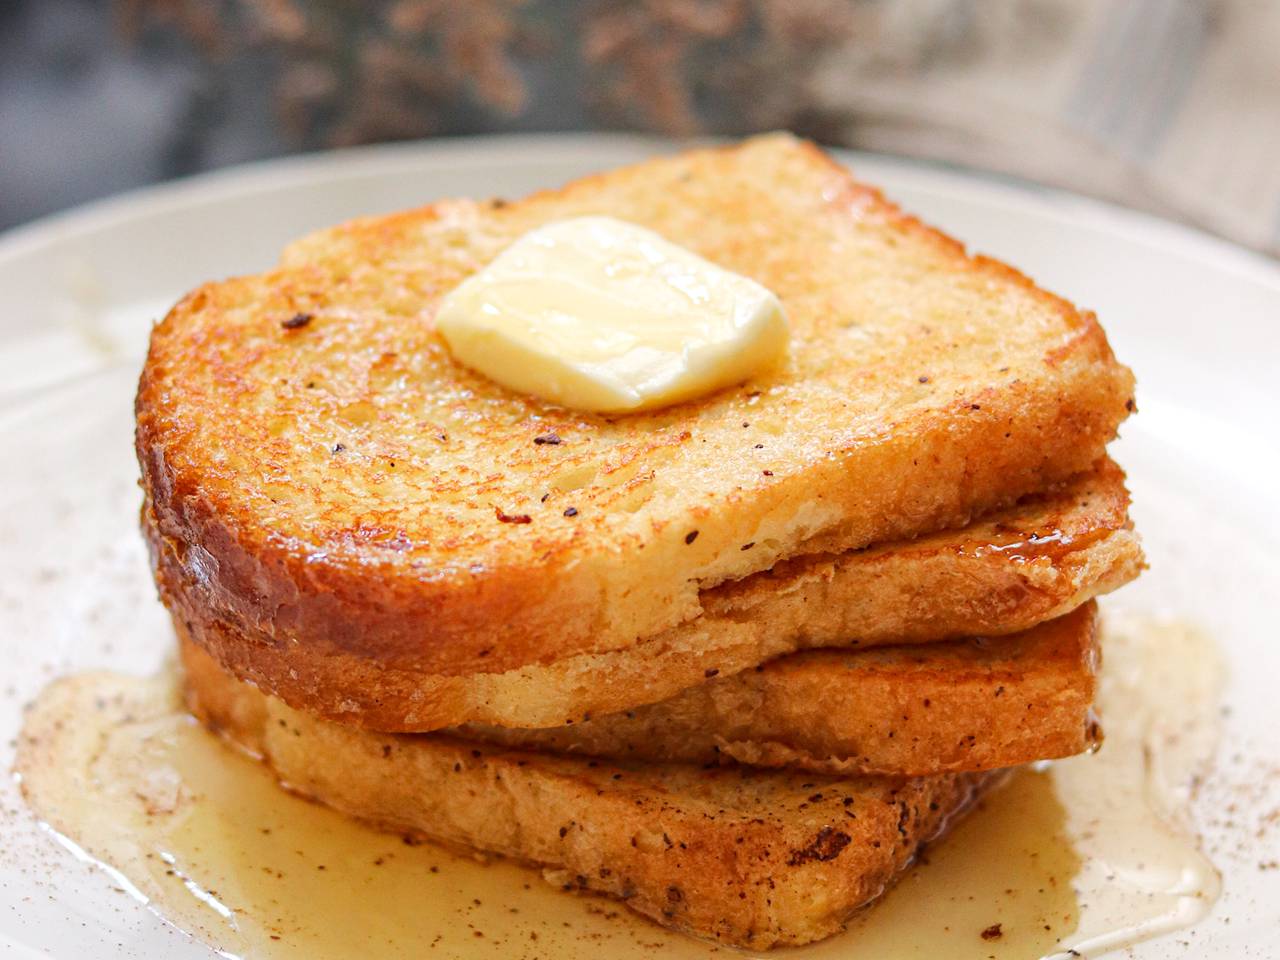 Yummy cinnamon French toast for breakfast